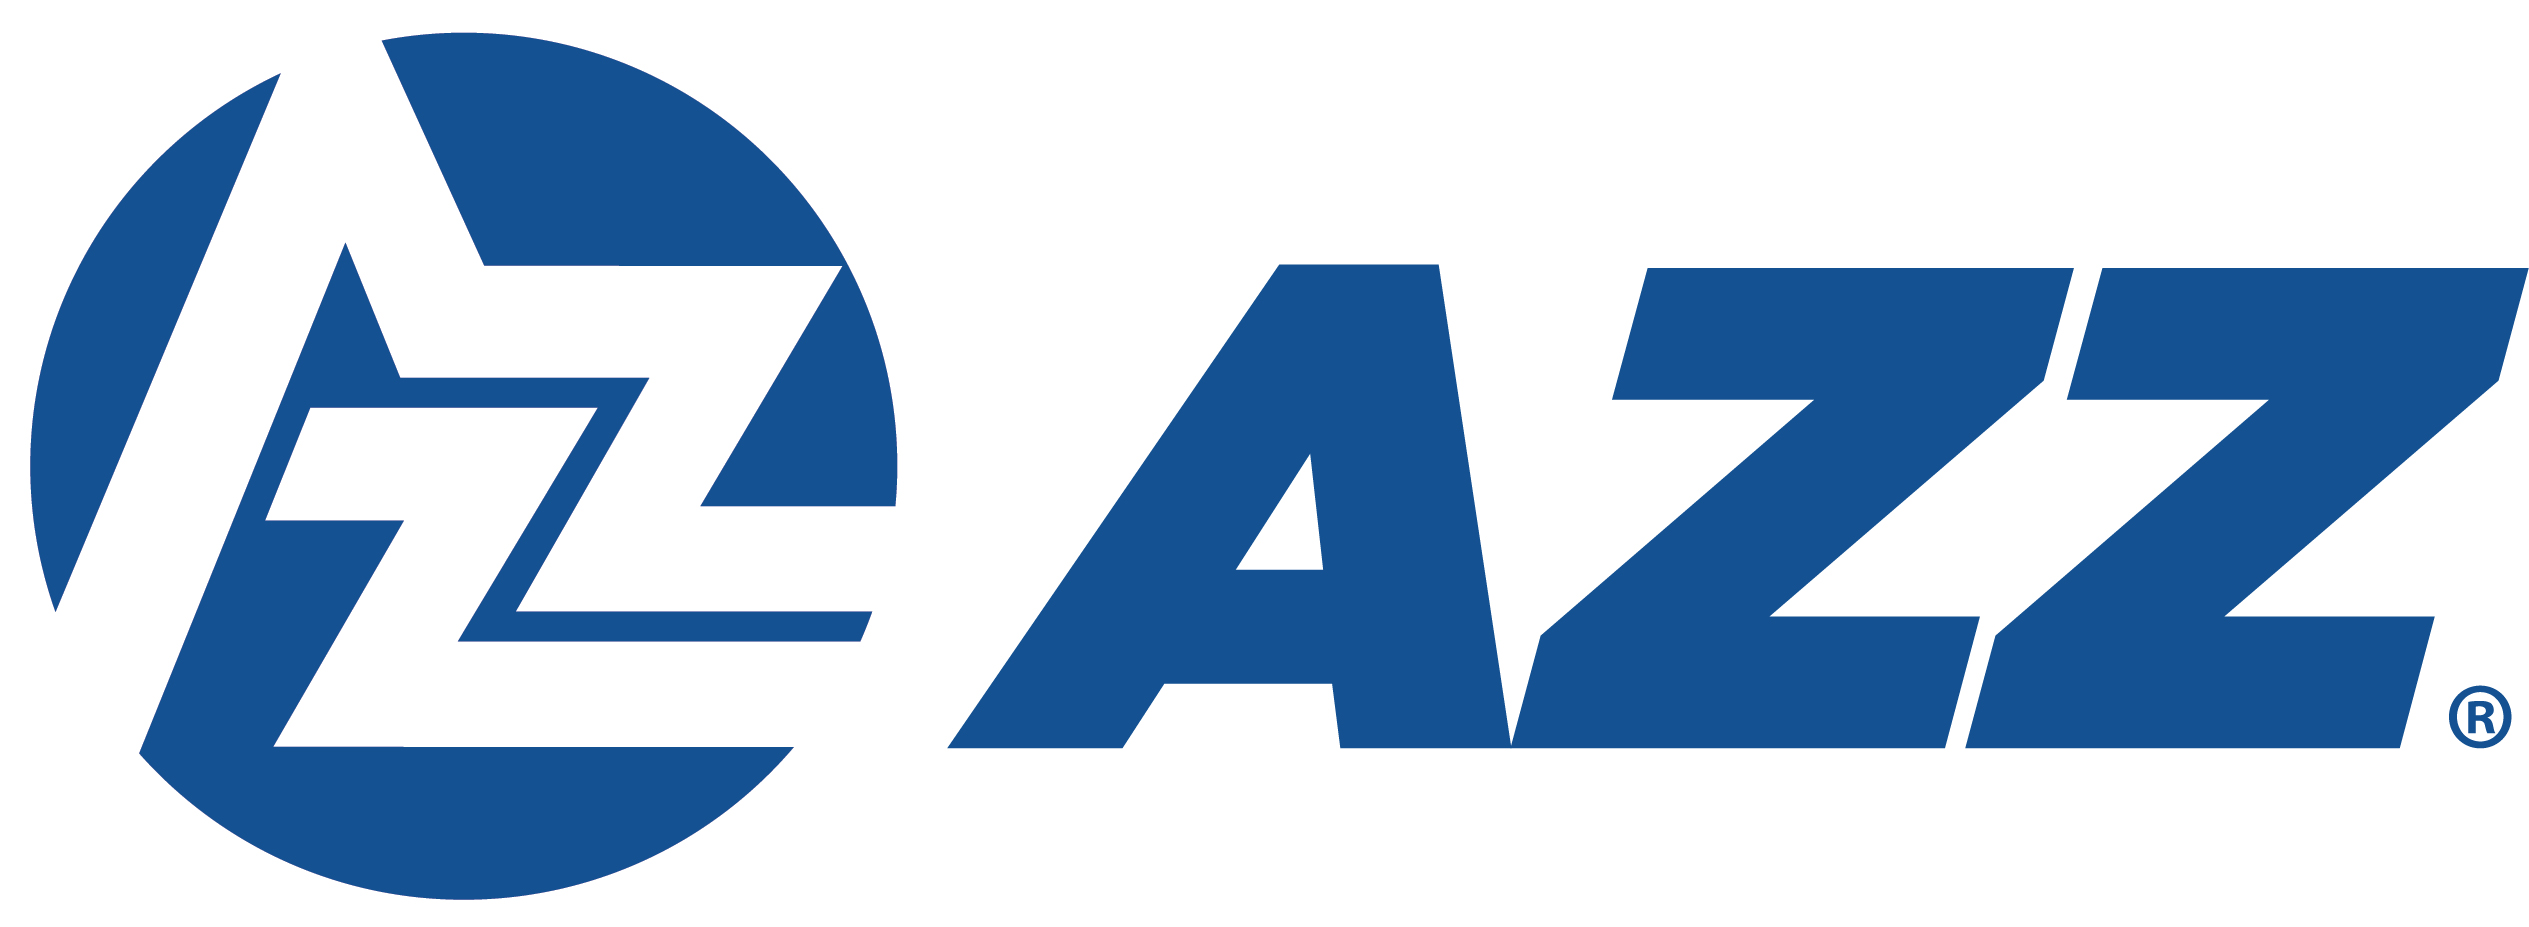 azz-20210228_g1.jpg